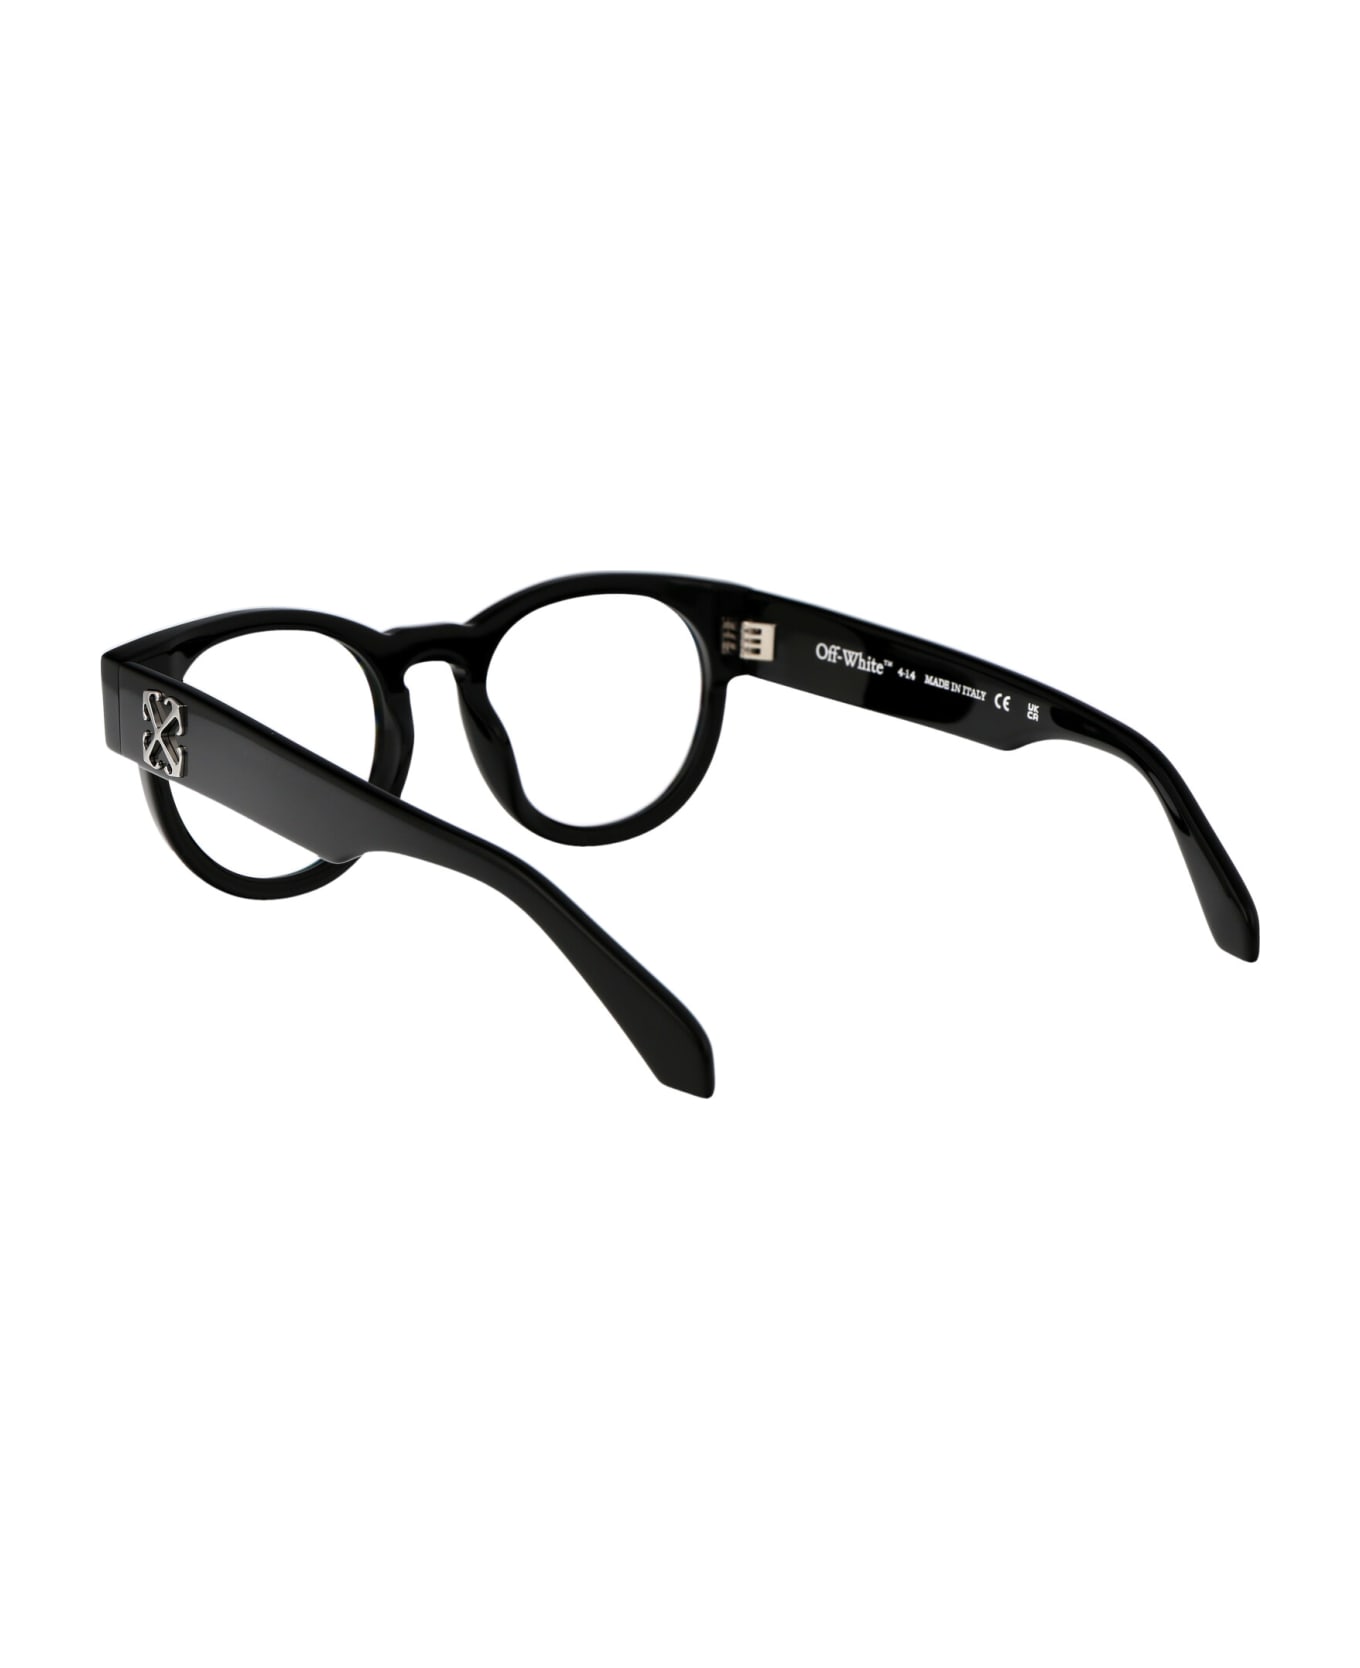 Off-White Optical Style 58 Glasses - 1000 BLACK